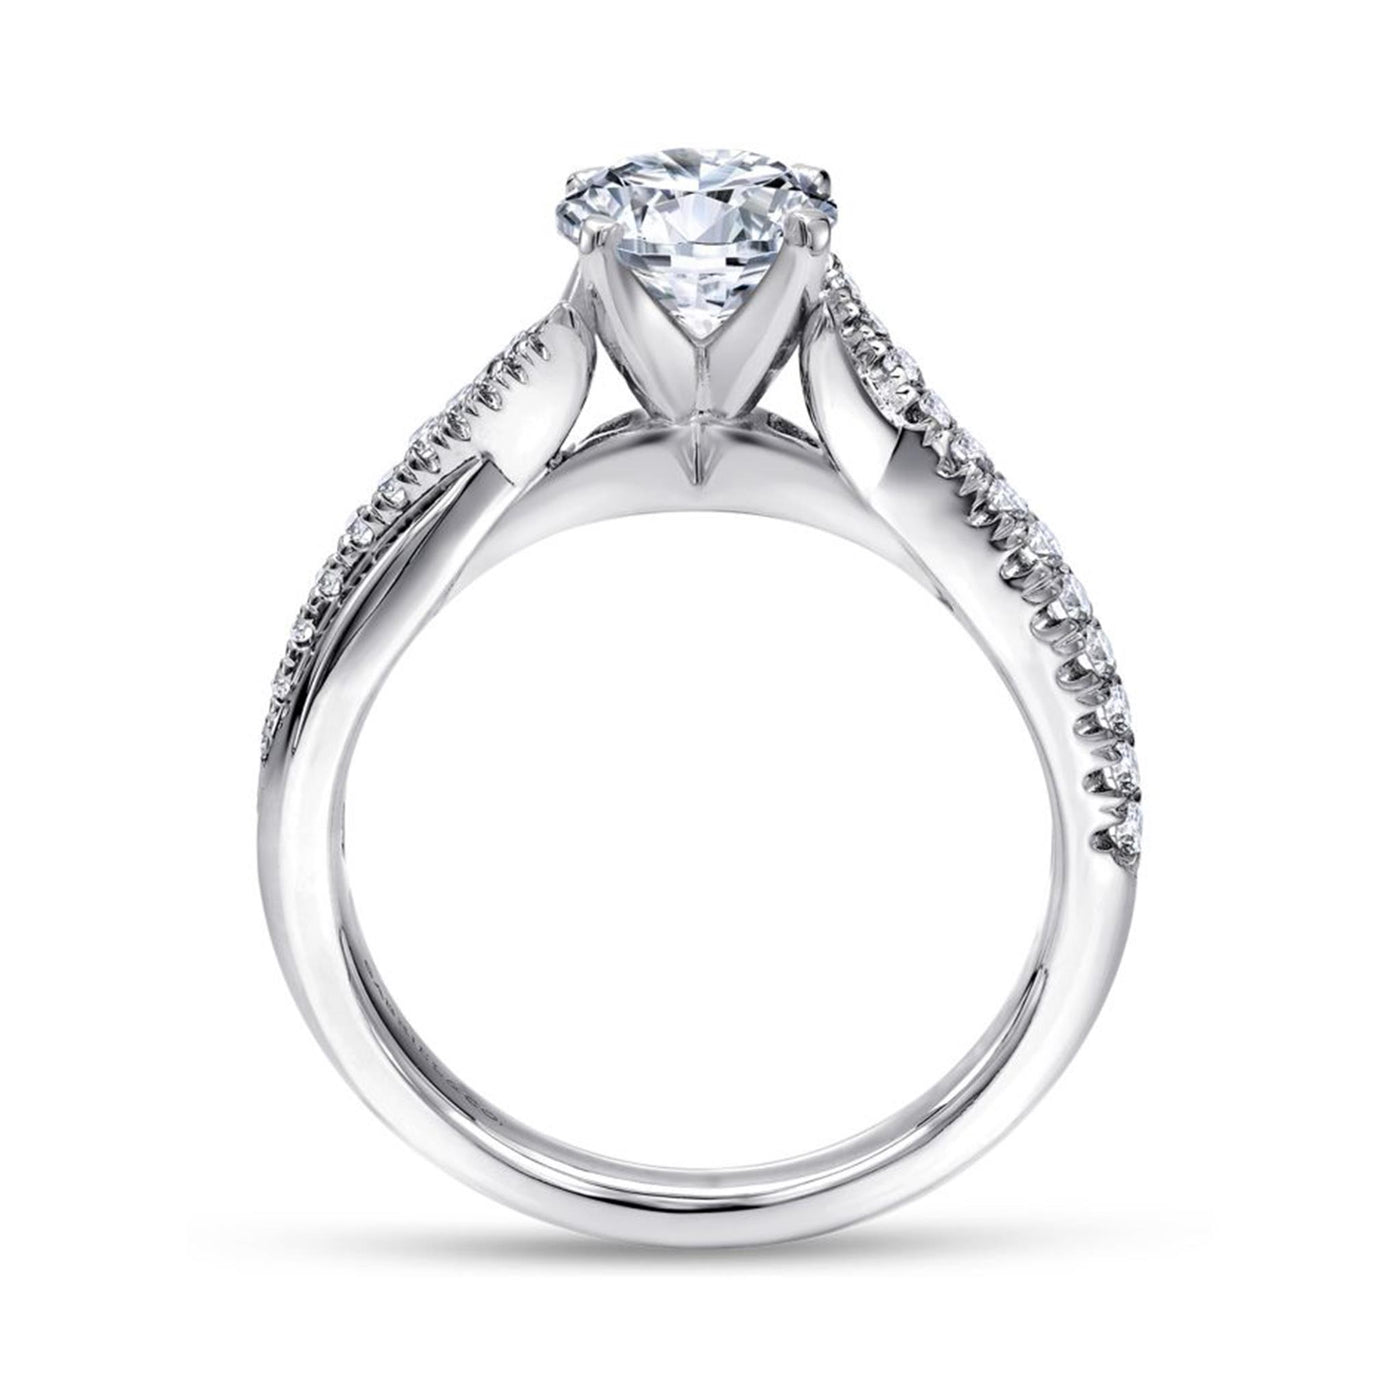 Gabriel 14K White Gold .19ctw 4 Prong Style Diamond Semi-Mount Engagement Ring